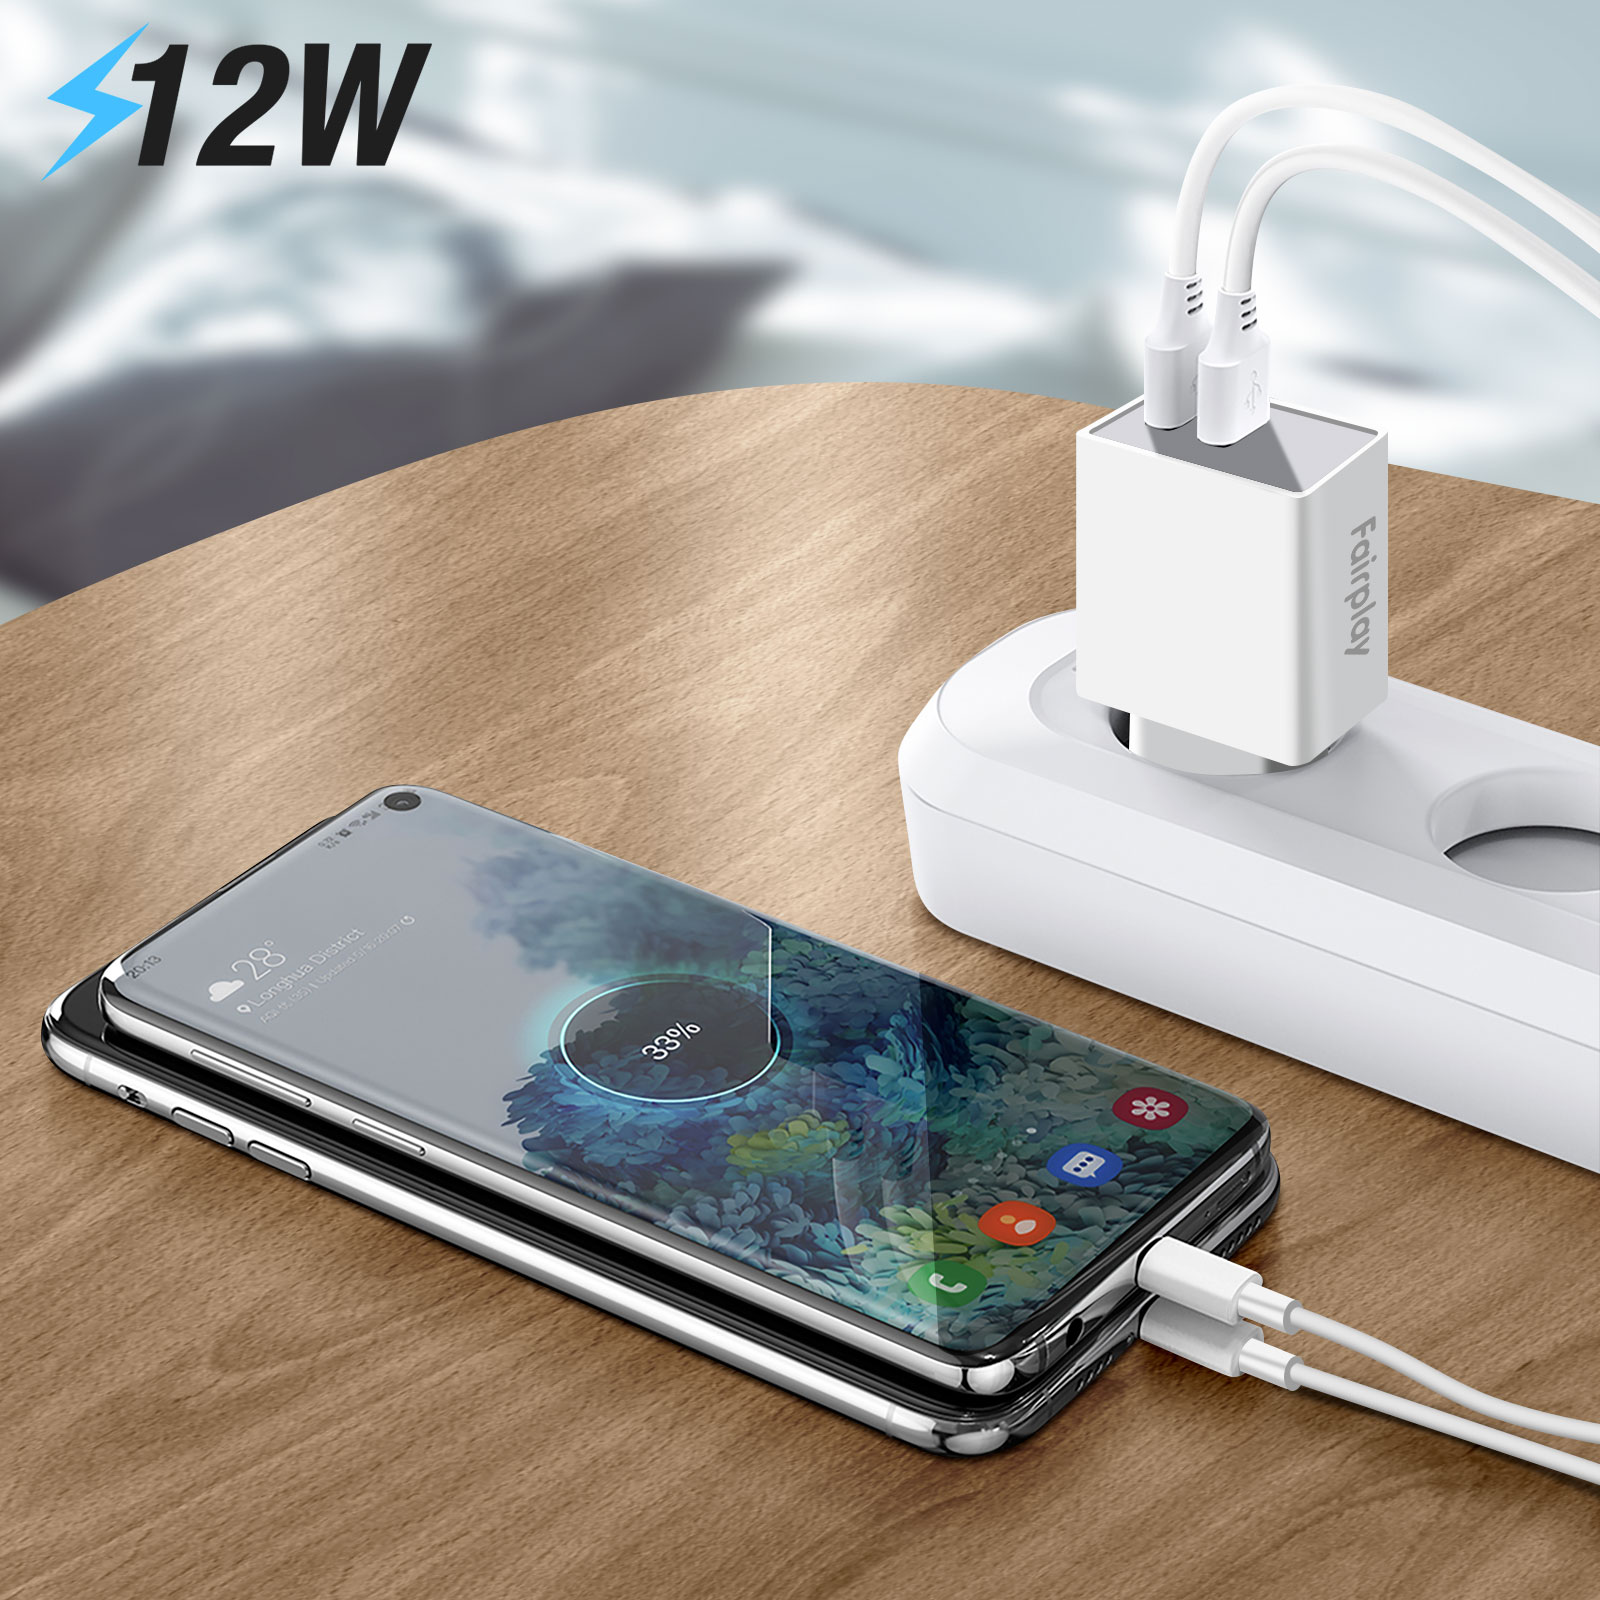 Chargeur USB pour smartphone, tablette 12W